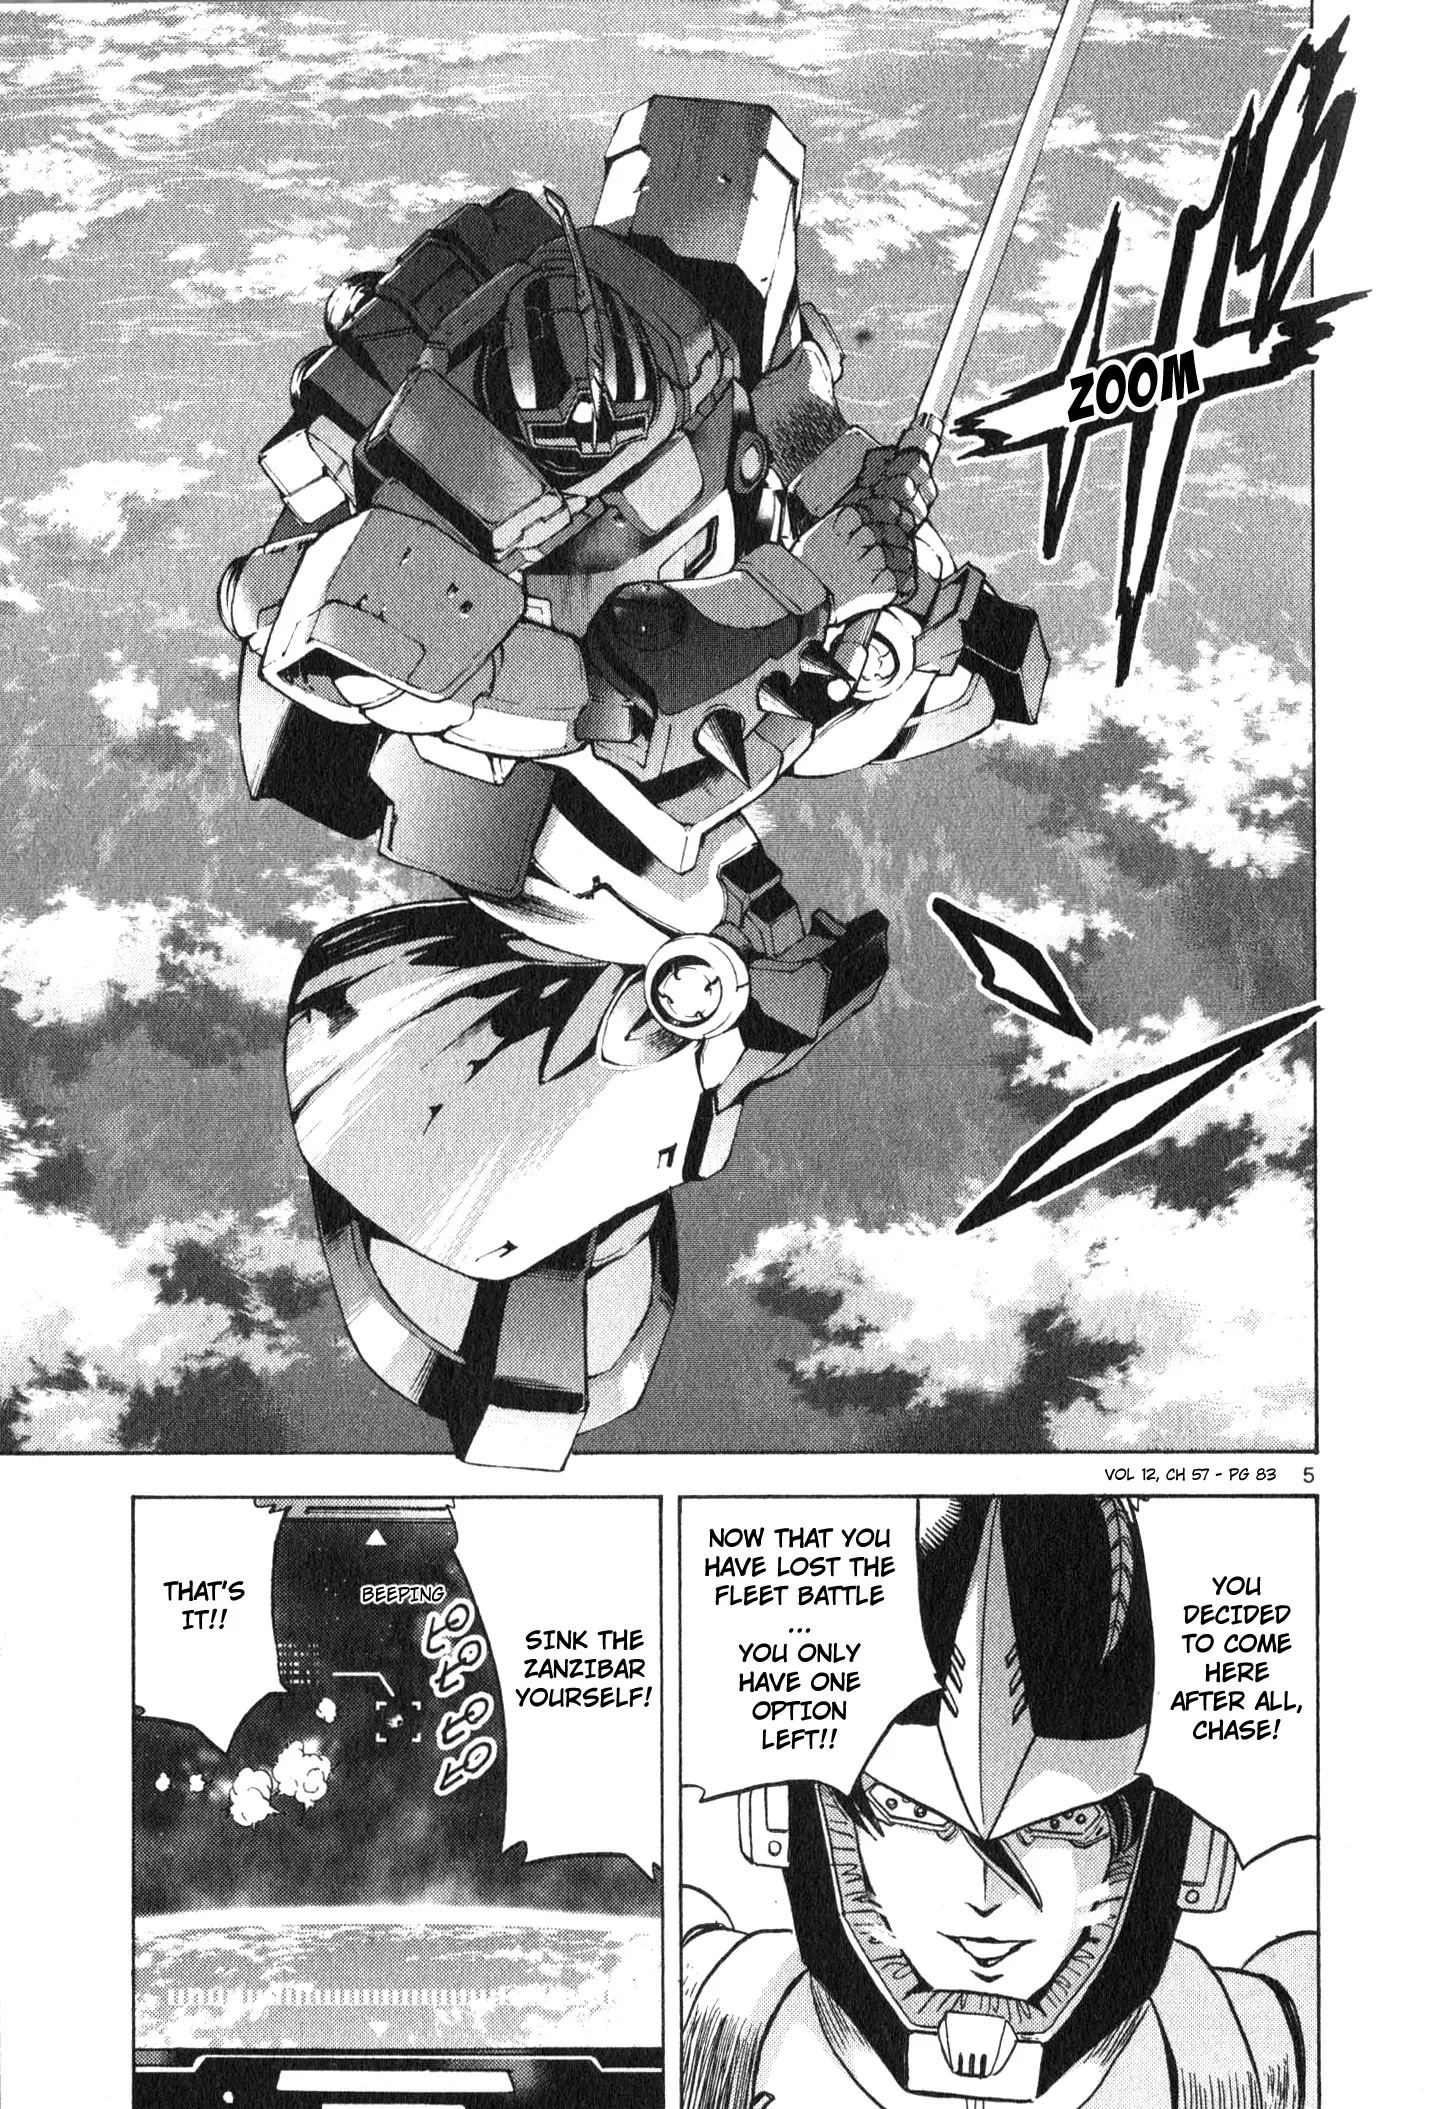 Mobile Suit Gundam Aggressor - 57 page 5-3479c3b9